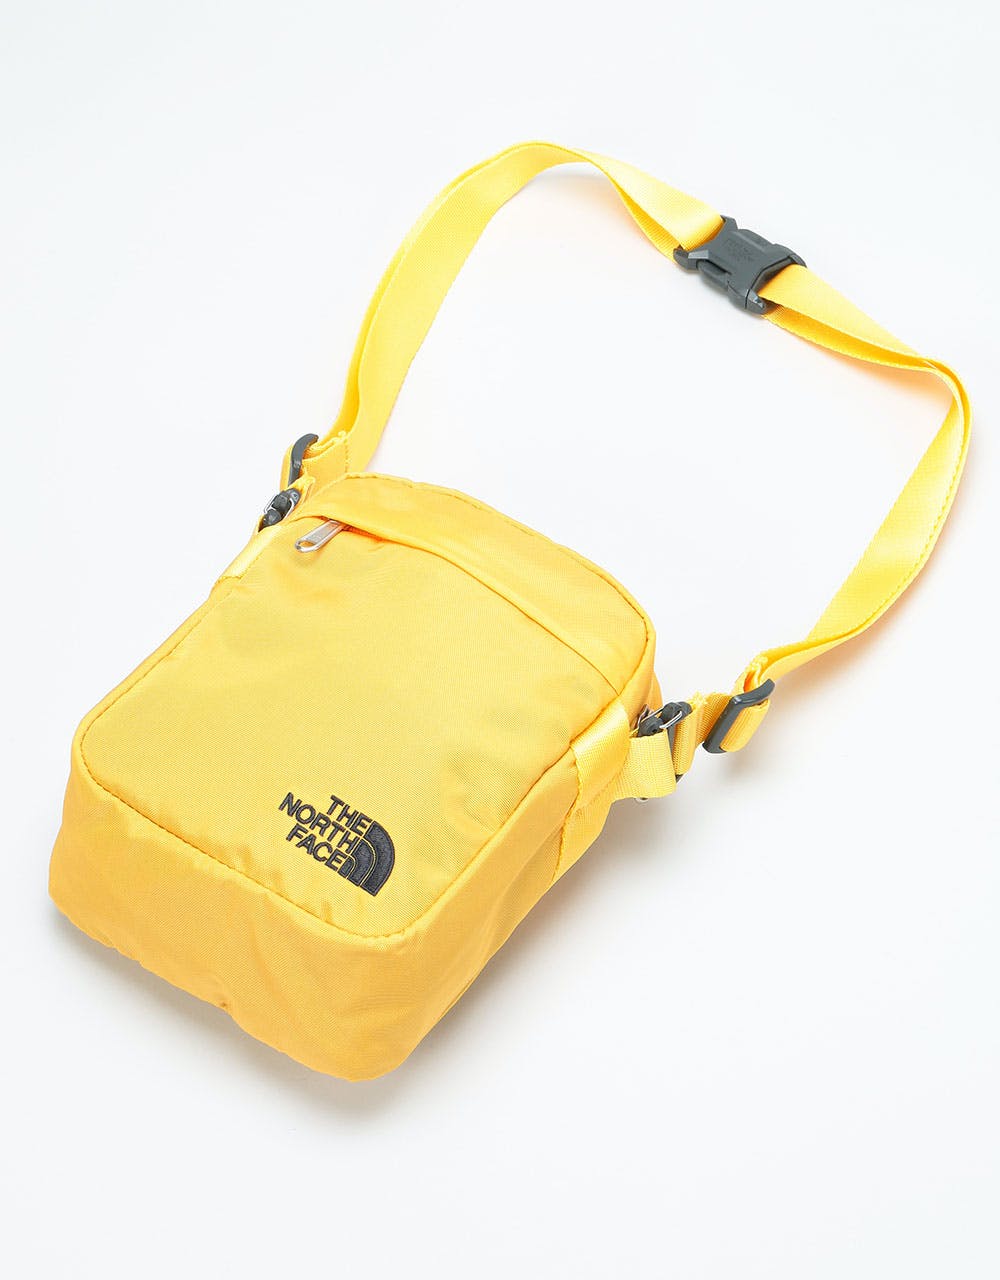 The North Face Convertible Cross Body Bag - TNF Yellow/TNF Black